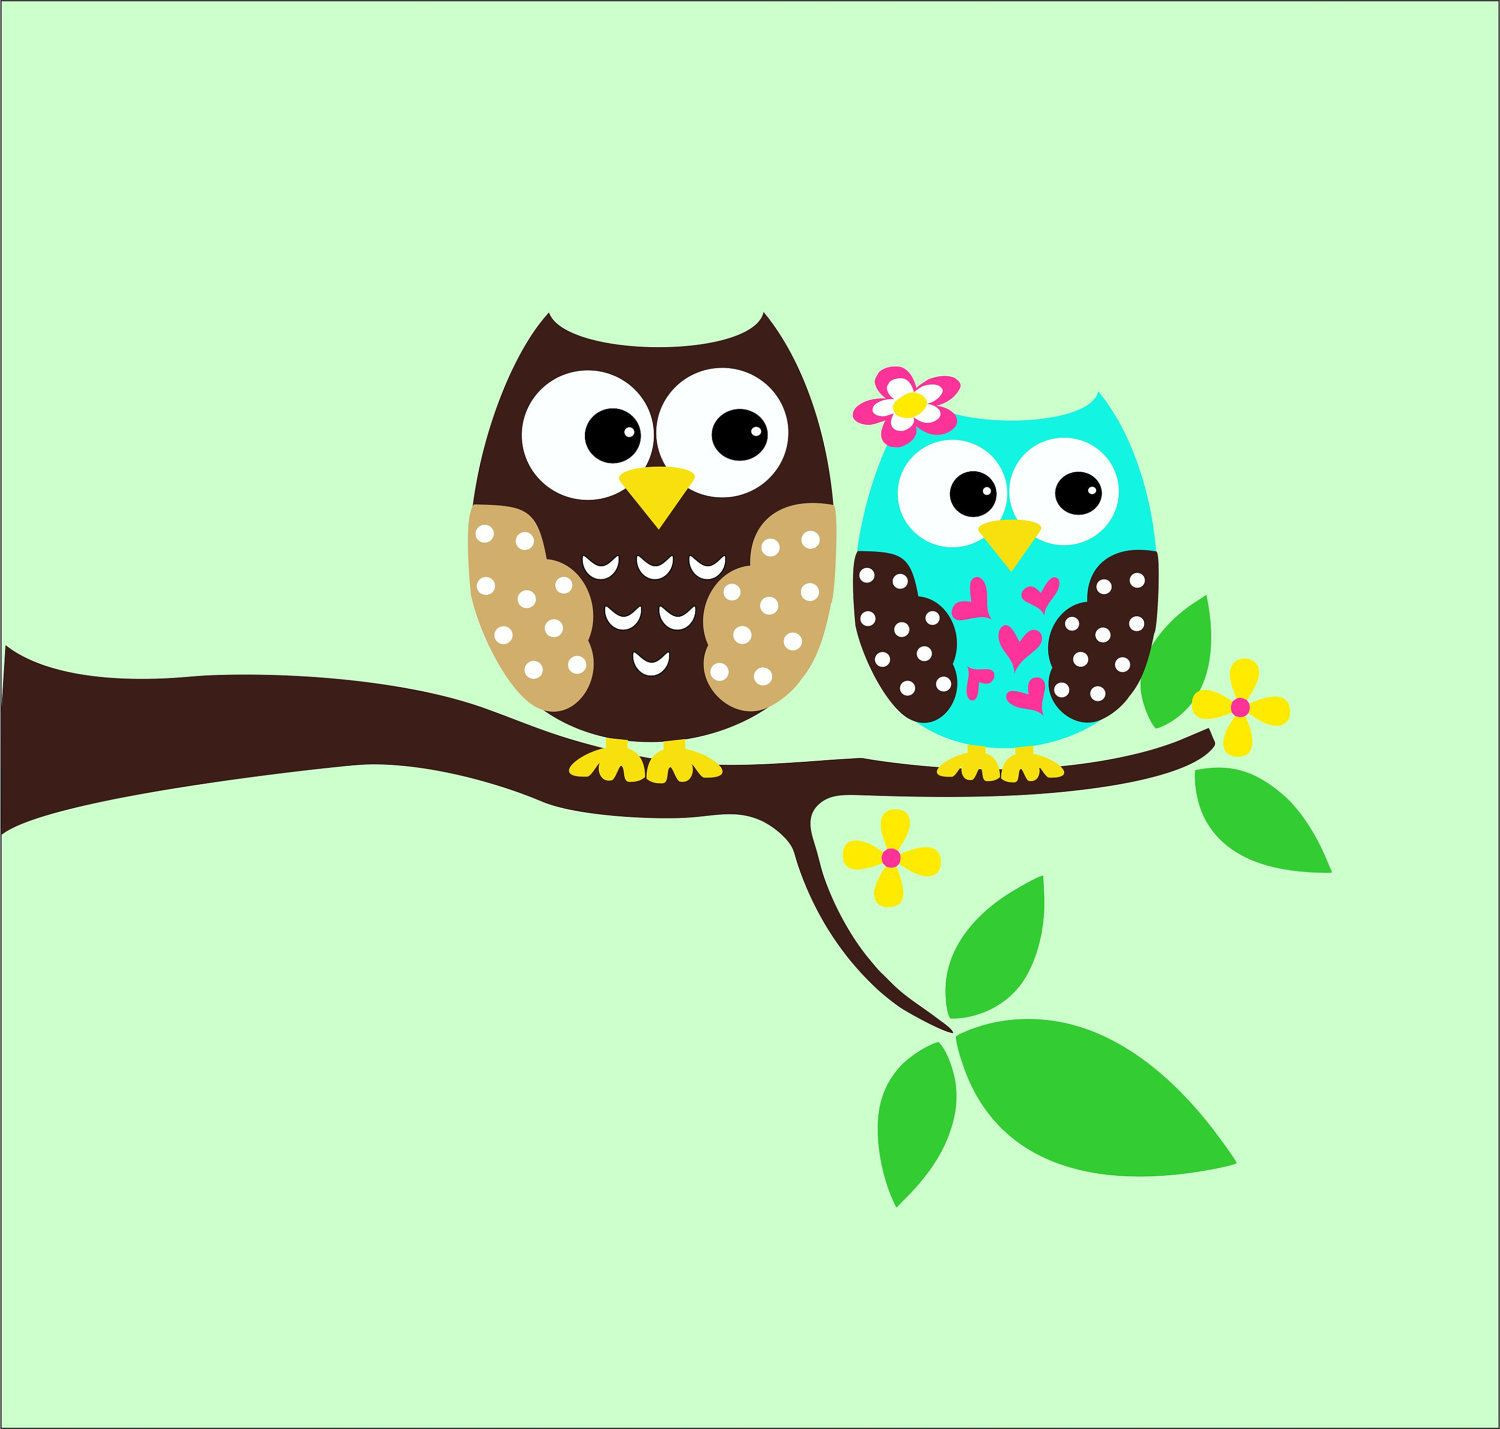 Kids Owl Decor
 Owl image DIY projects